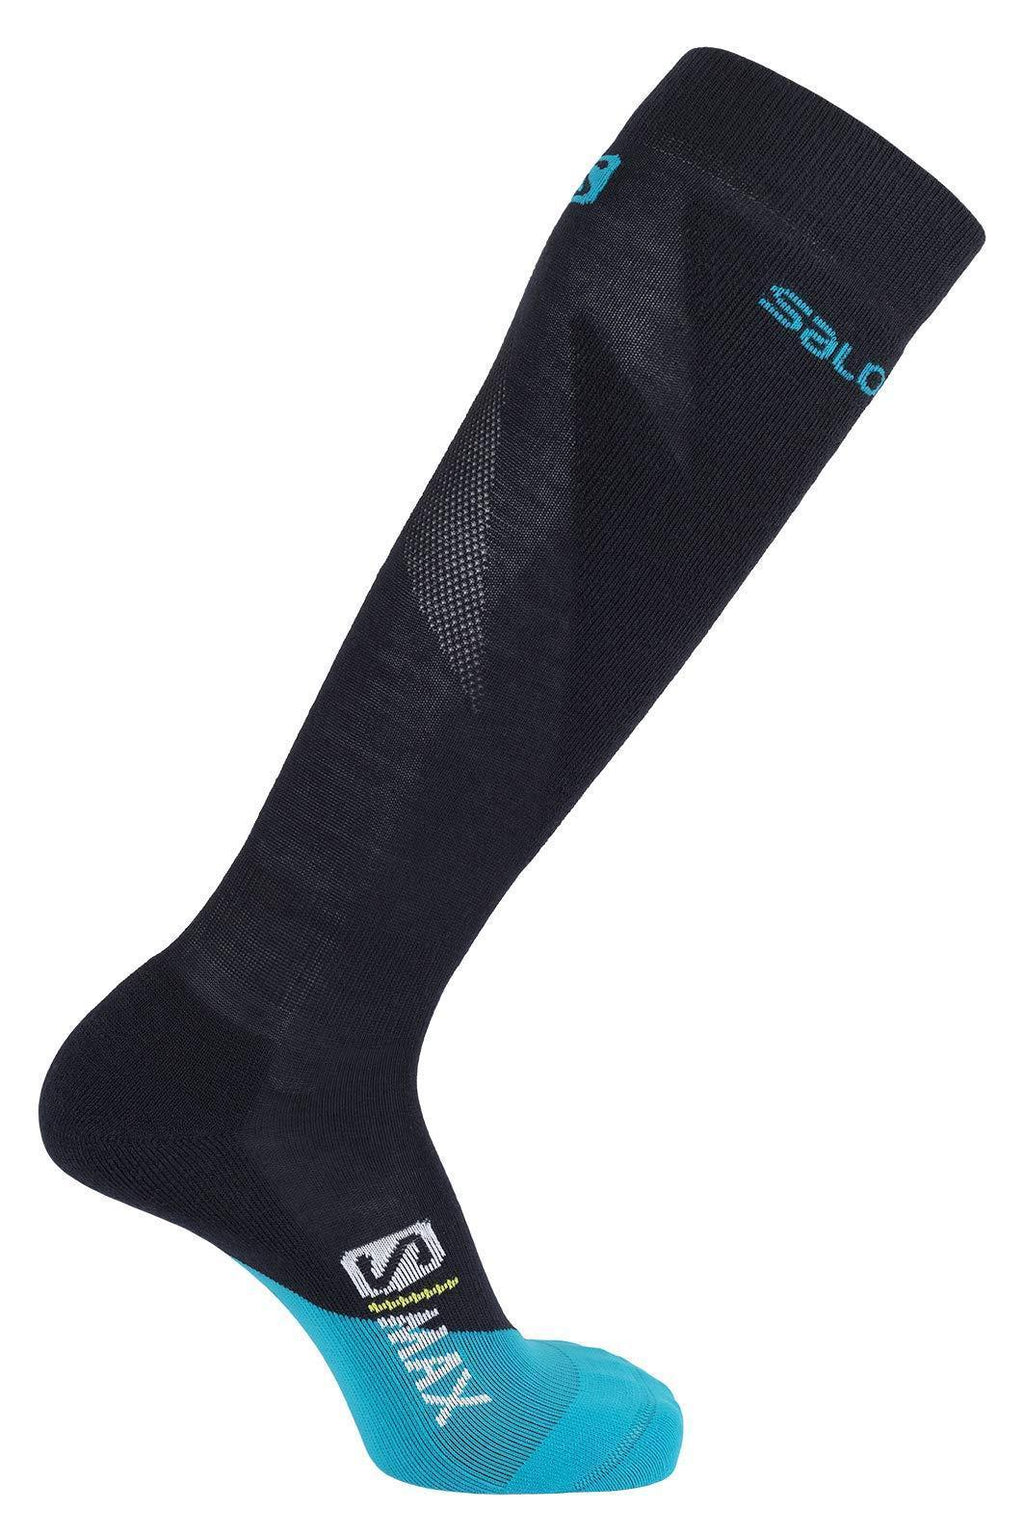 [Australia] - SALOMON Women's Pair of High Socks, S/Max W, Polyamide/Nylon M (5.5-7) Black/Blue (Night Sky/Tile Blue) 